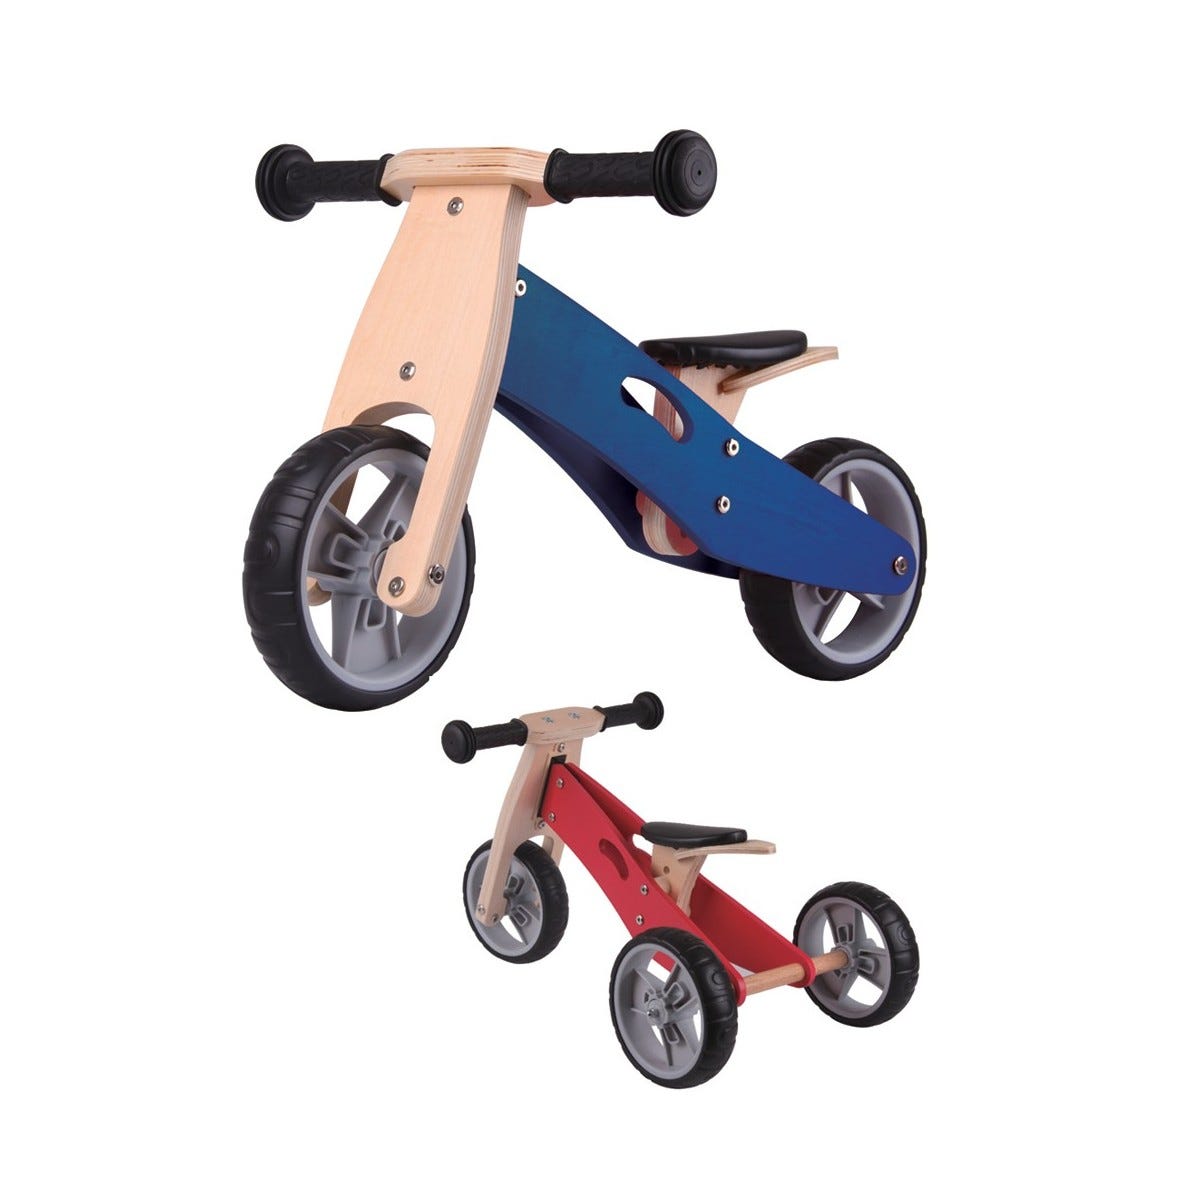 Triciclo Bicicletta per Bambini Legno Blu Pedagogica Senza Pedali a Spinta  Bici